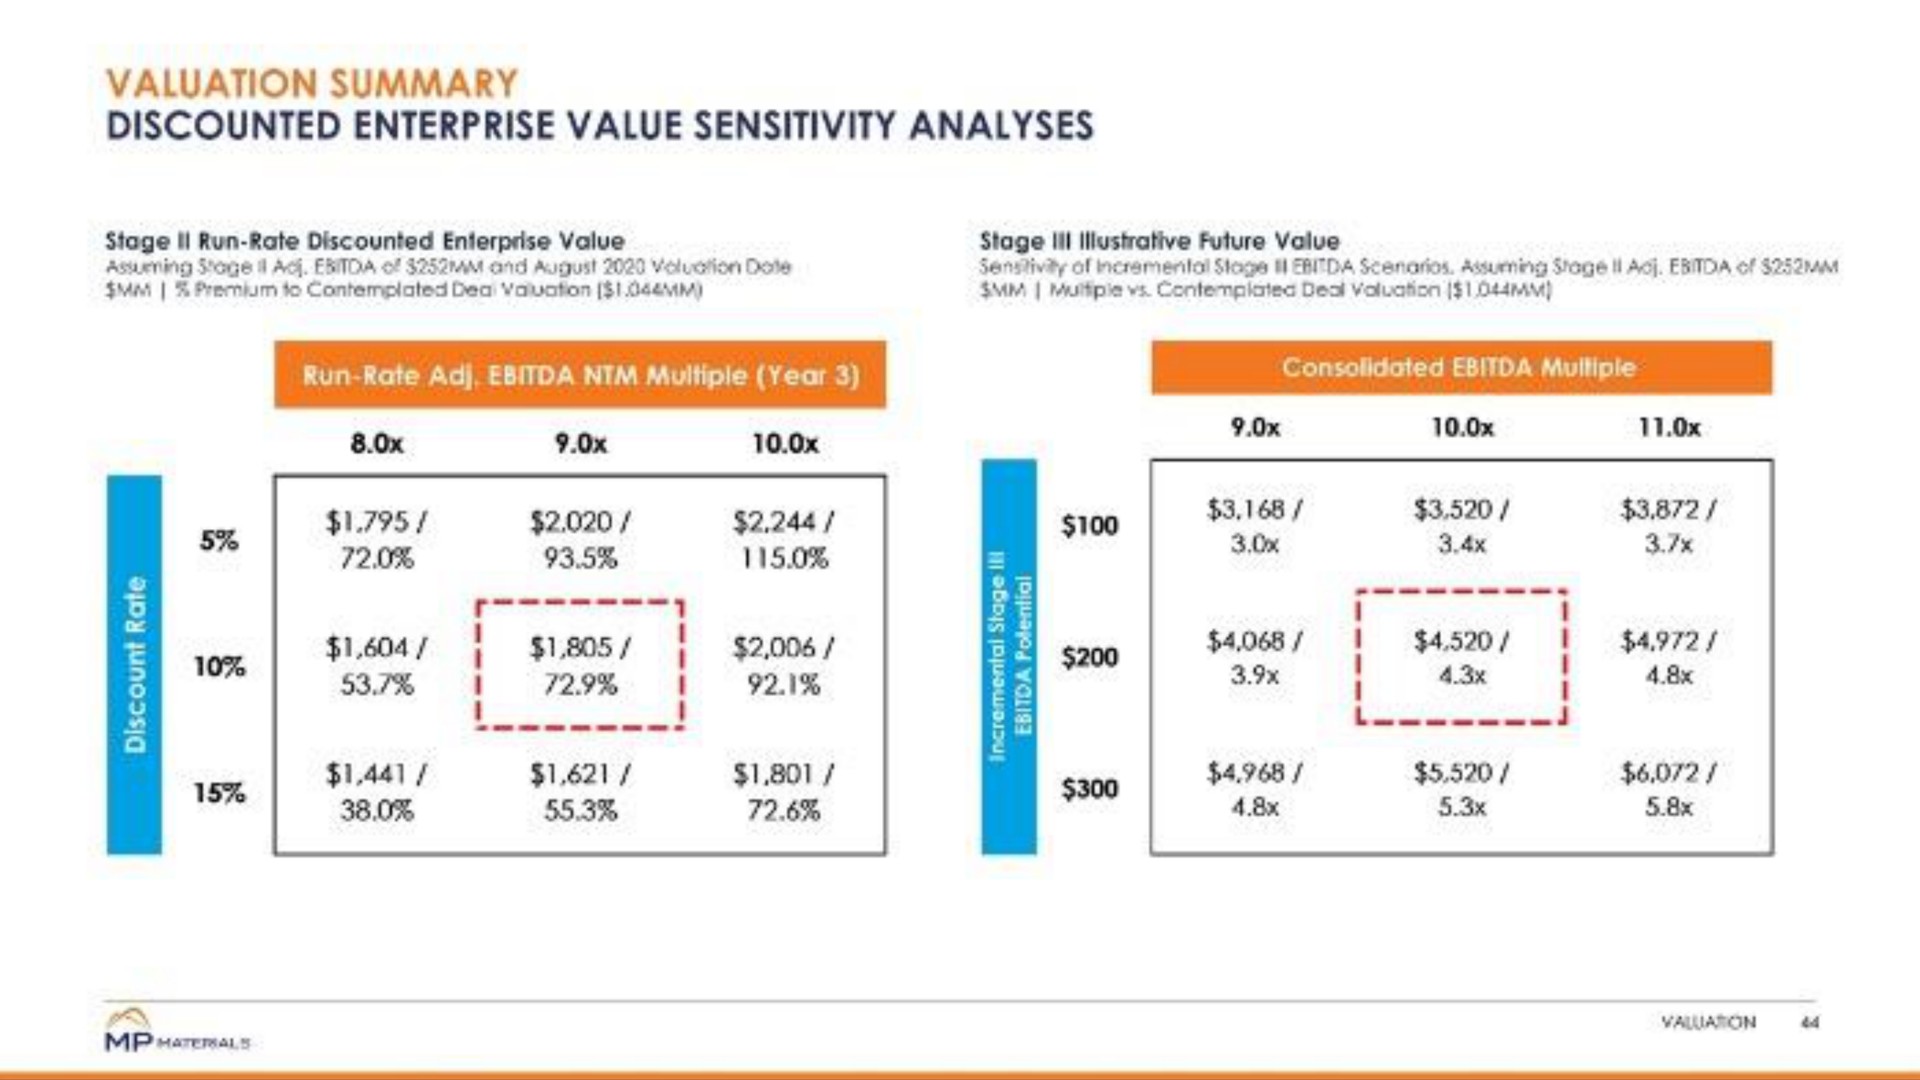 valuation summary discounted enterprise value sensitivity analyses | MP Materials